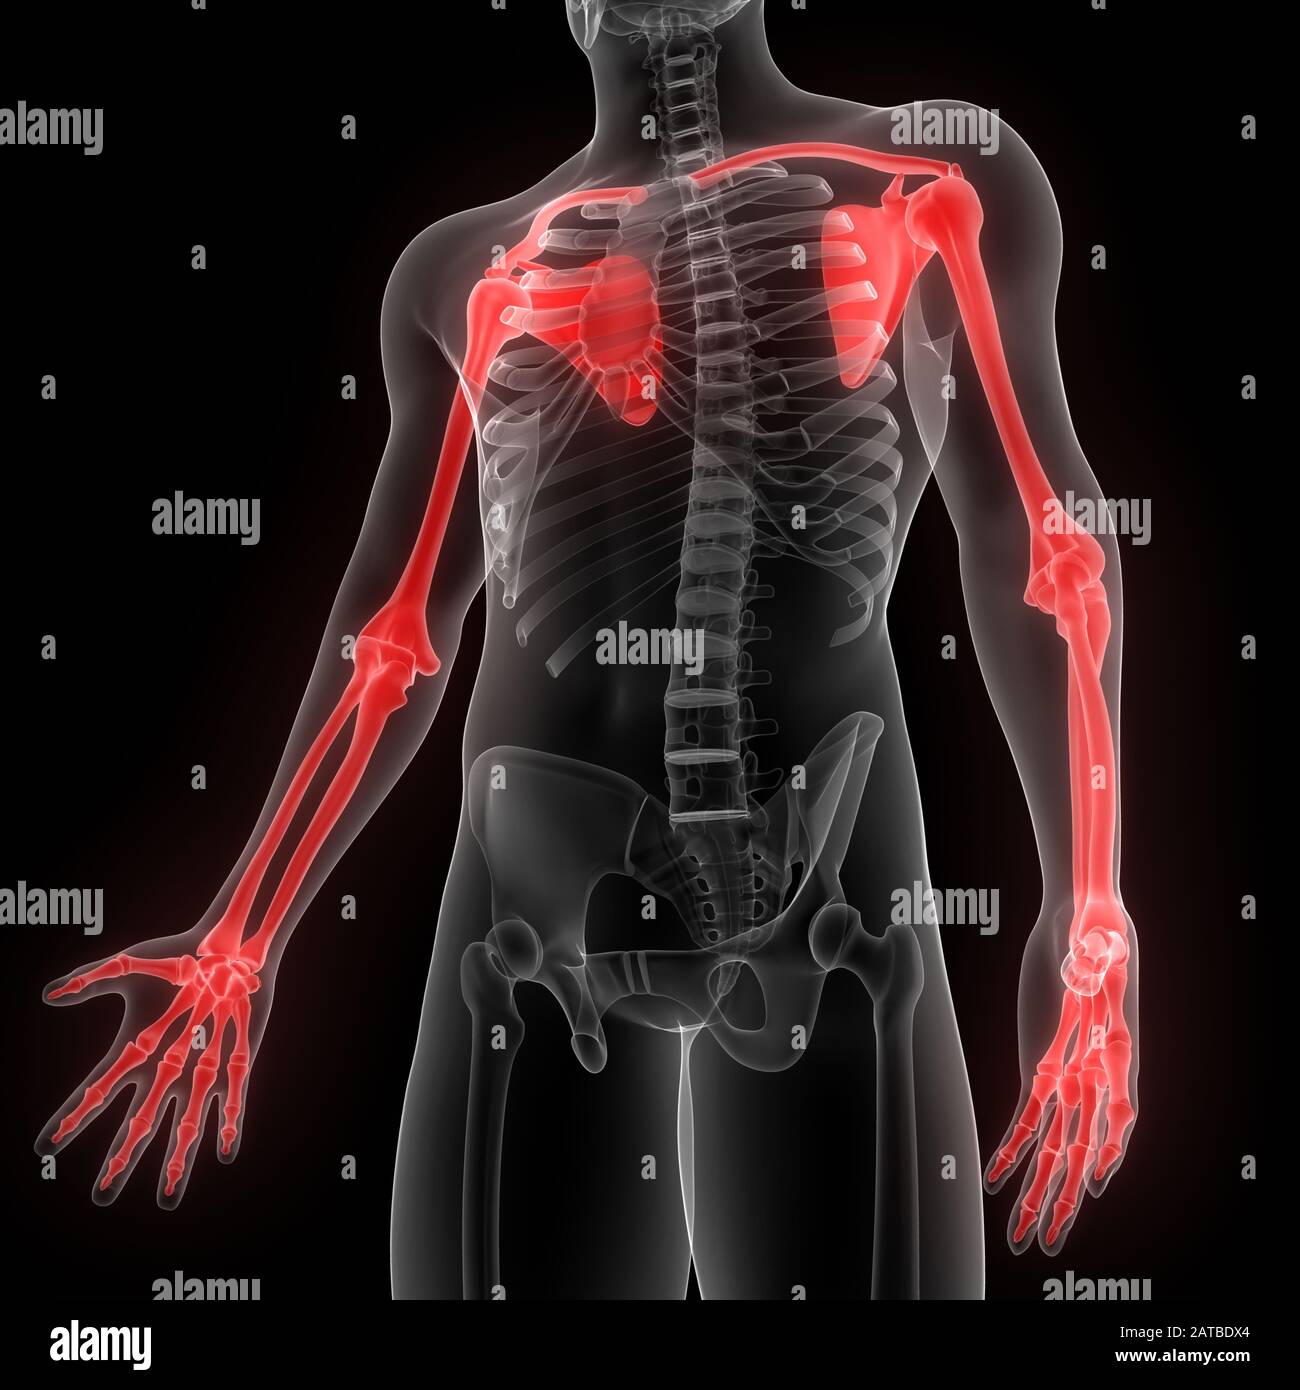 Upper Limbs of Human Skeleton System Anatomy Stock Photo